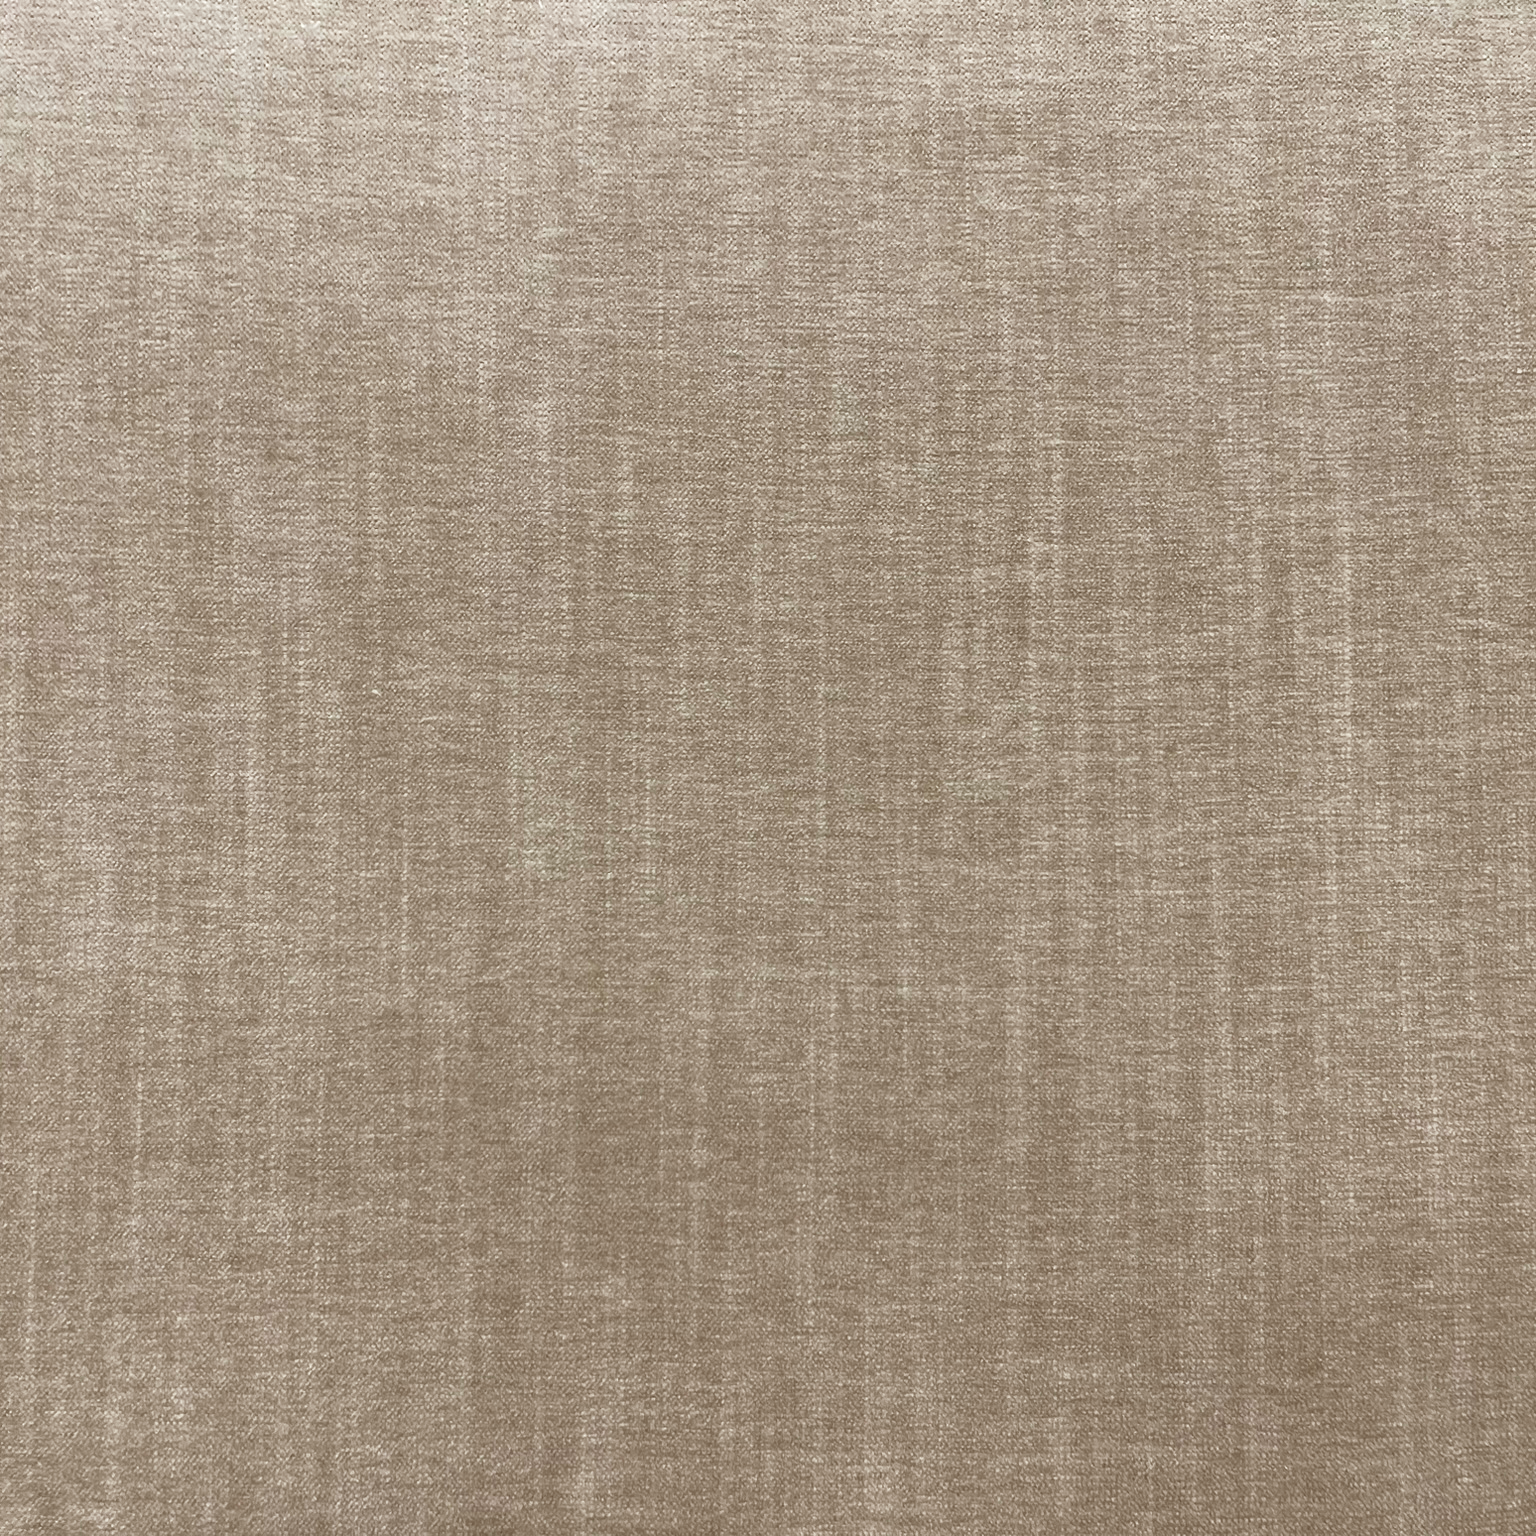 Adrano Fabric Samples - Rydan Interiors